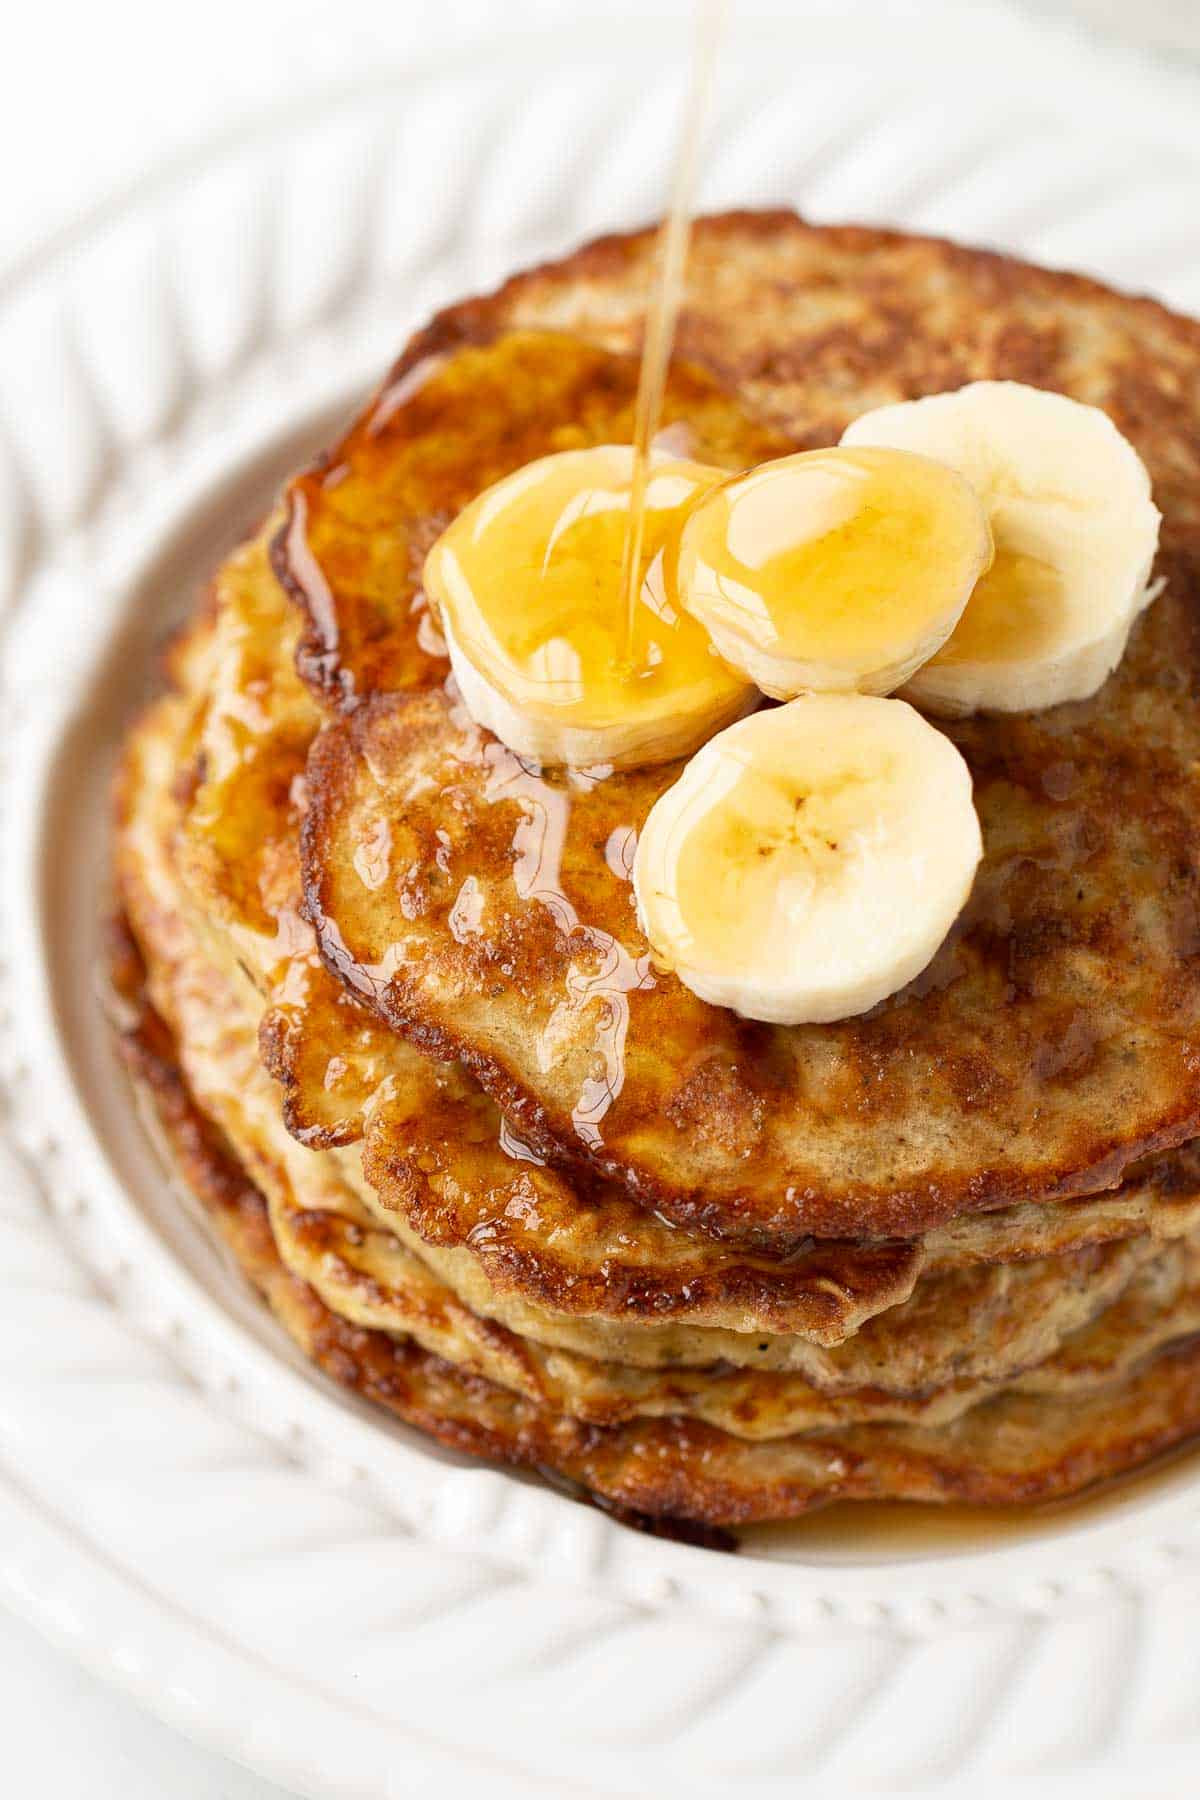 Easy Banana Egg Oatmeal Pancakes to Make at Home